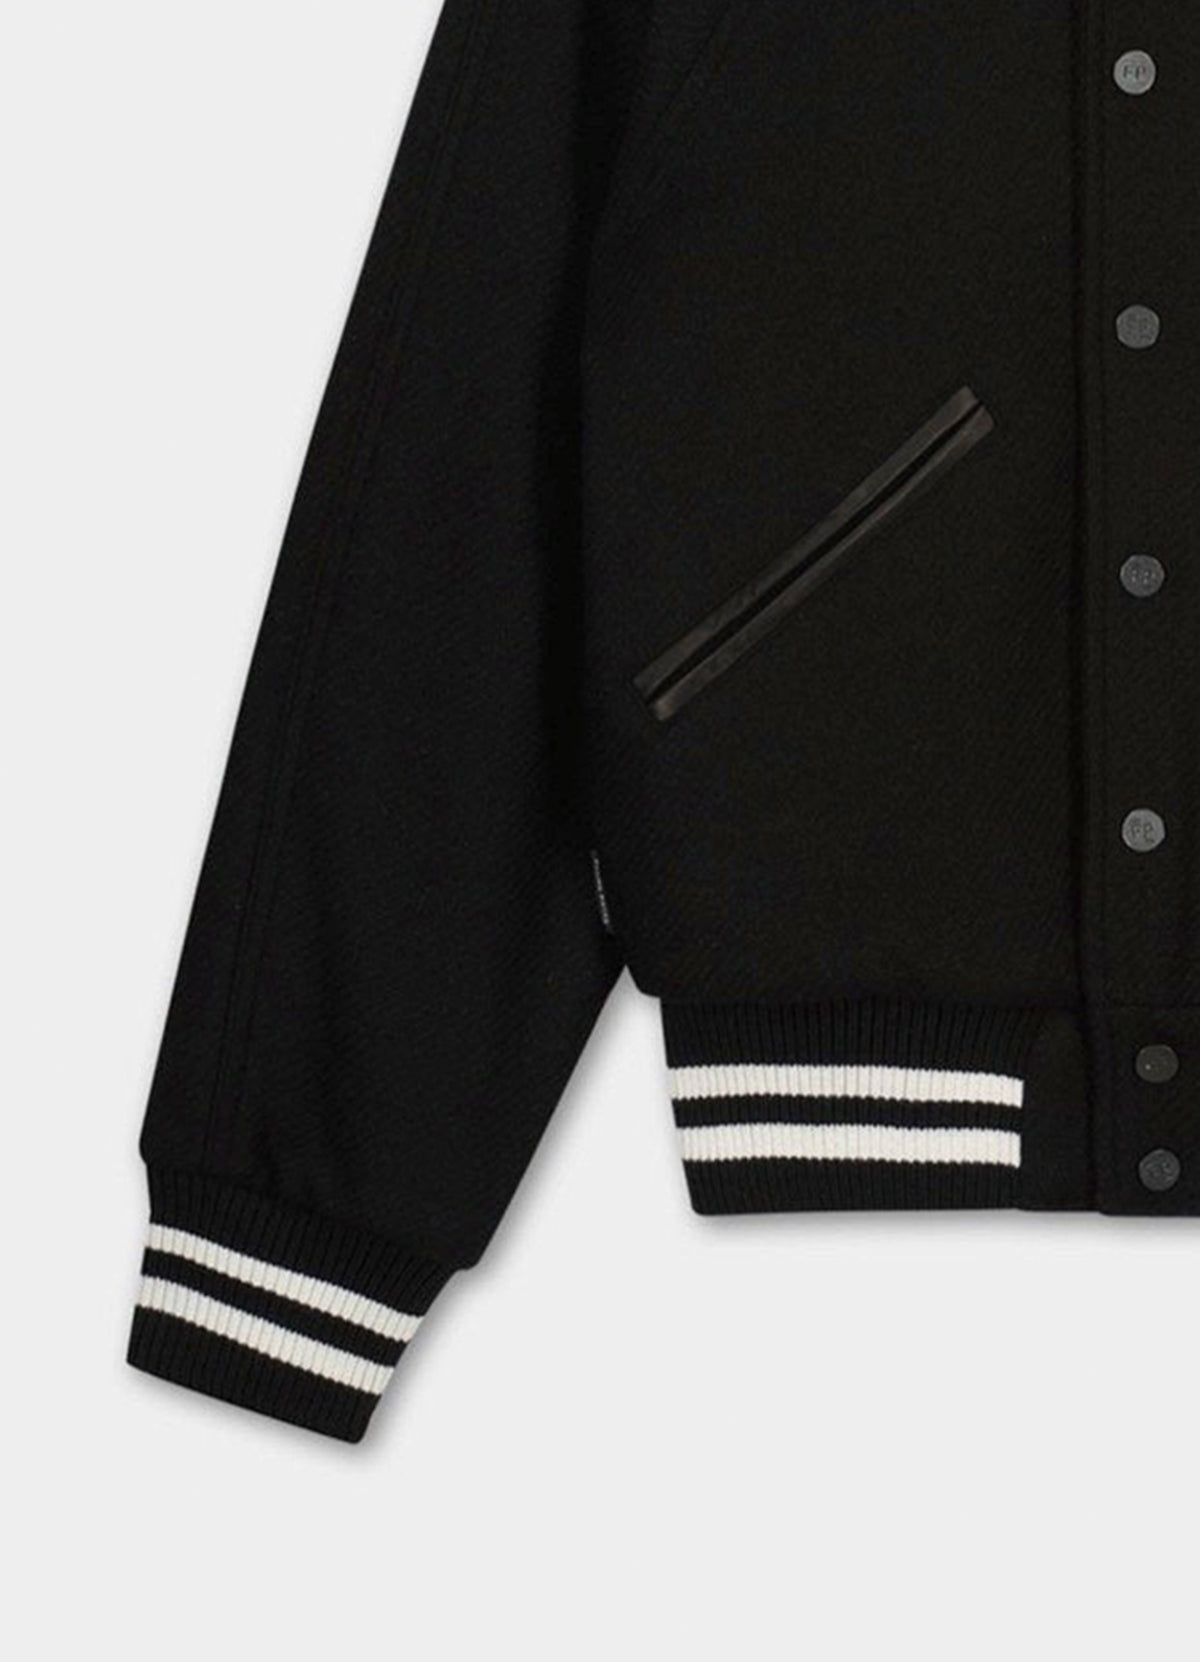 Womens Deep Black Wool Varsity Jacket | Elite Jacket